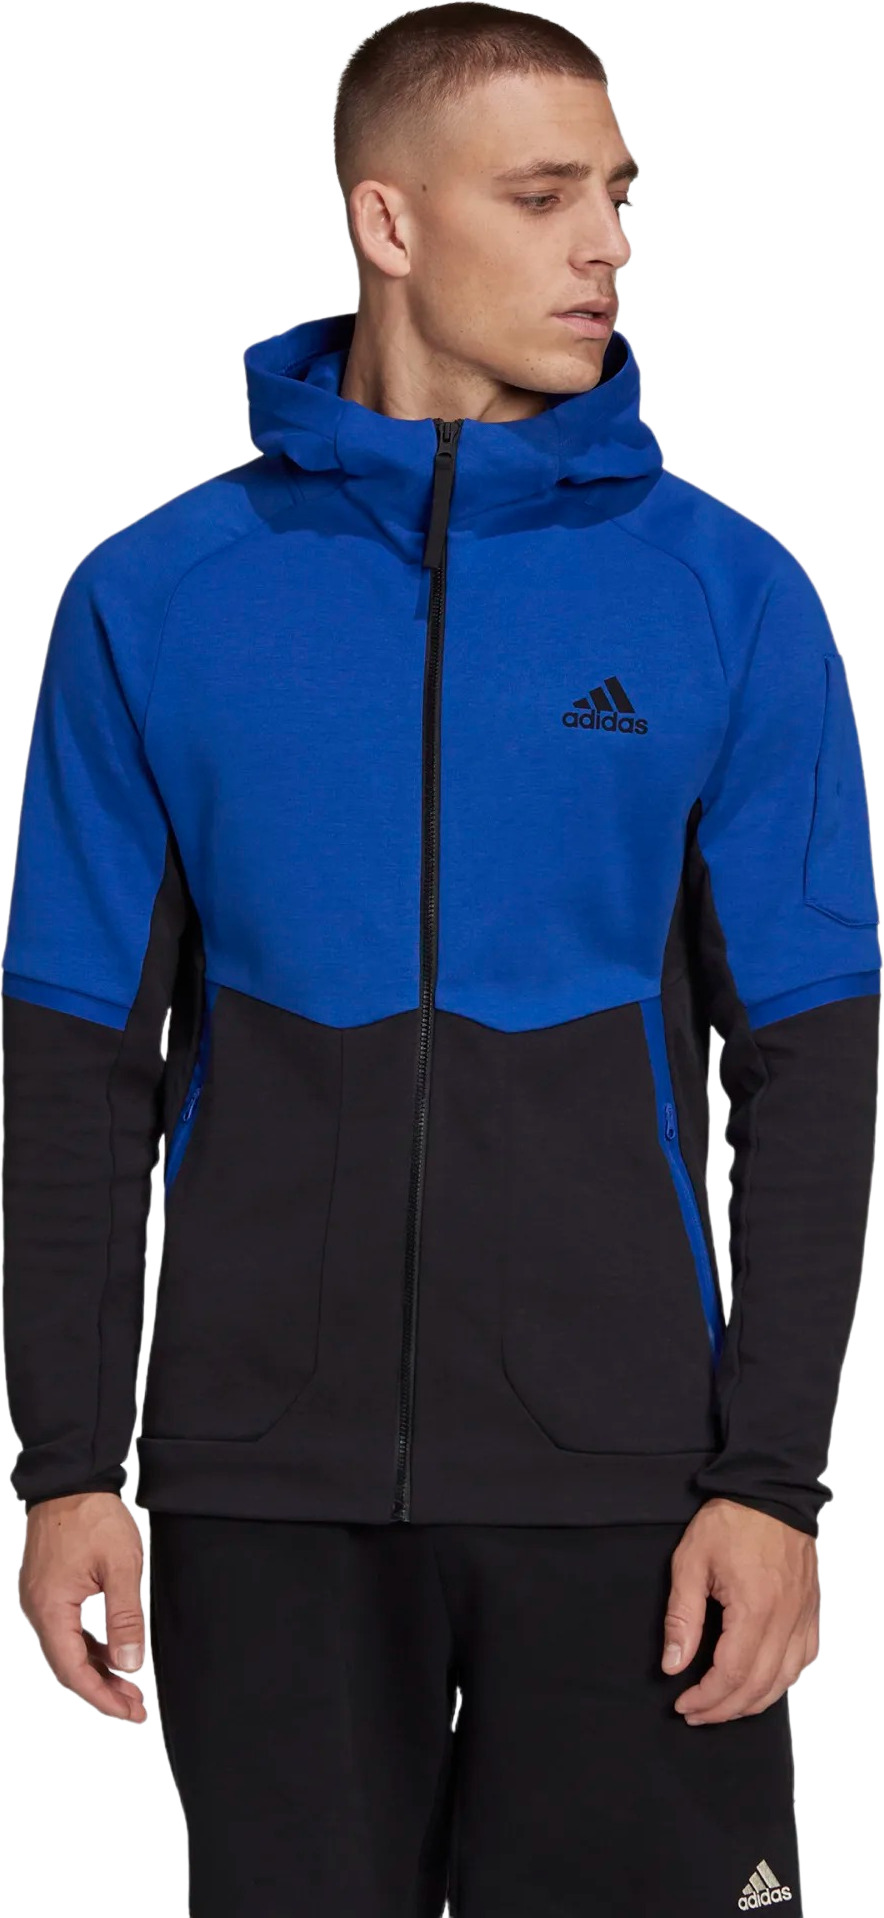 Толстовка мужская Adidas M D4Gmdy Fz Hoody синяя XL - купить в SportPoint, цена на Мегамаркет